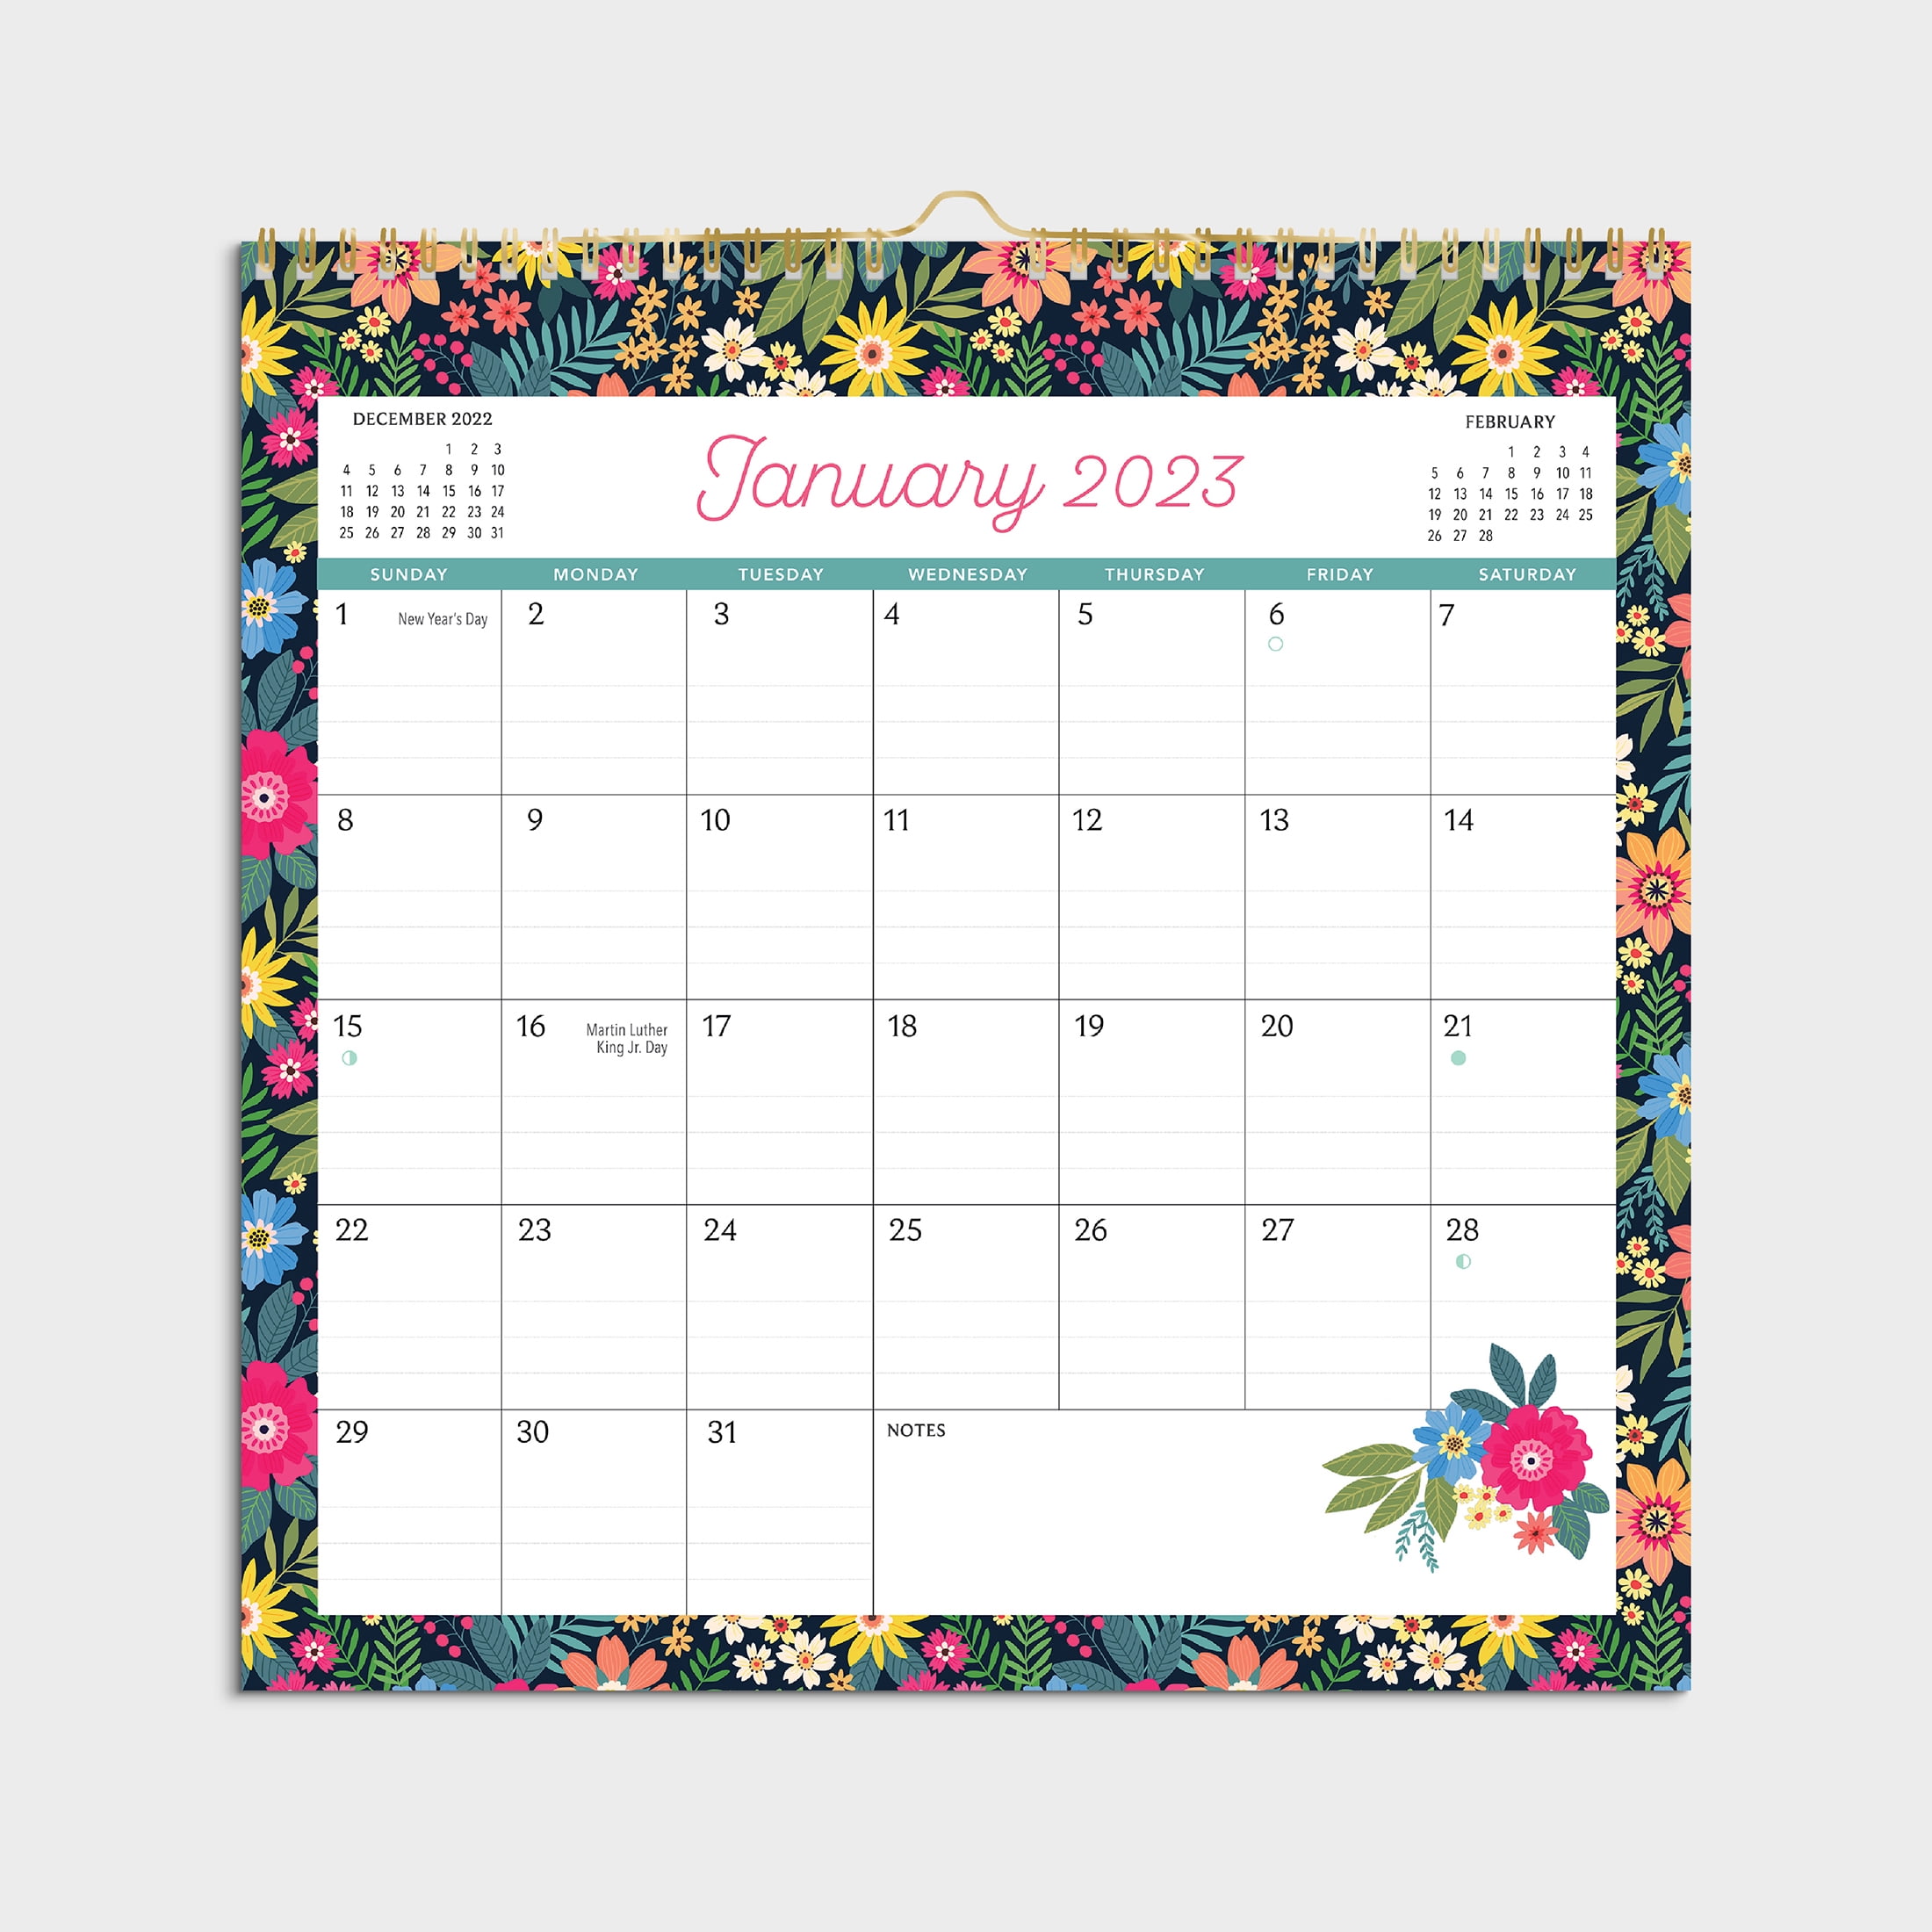 2023 -12 Month Calendar-Floral border- 12x12 Spiral bound-by Pen+Gear